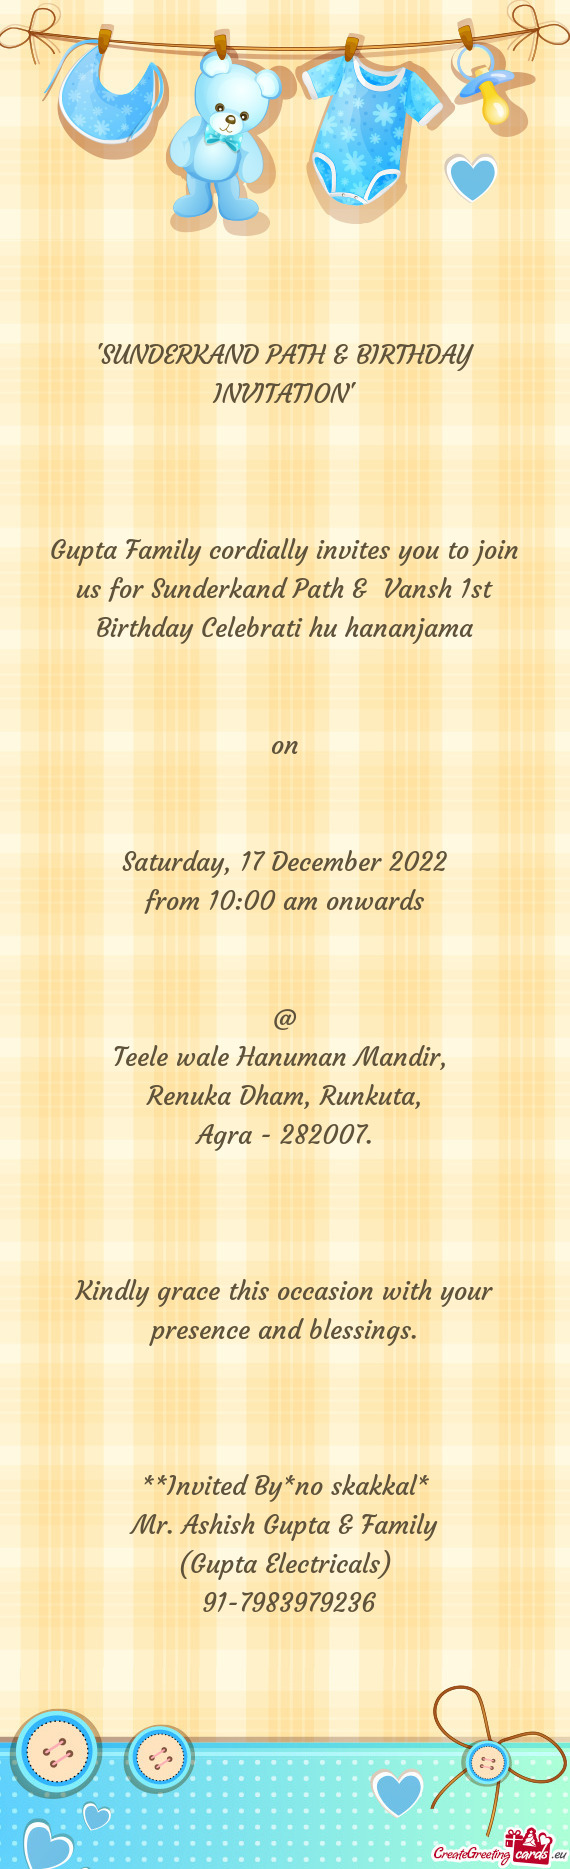 Gupta Family cordially invites you to join us for Sunderkand Path & Vansh 1st Birthday Celebrati hu